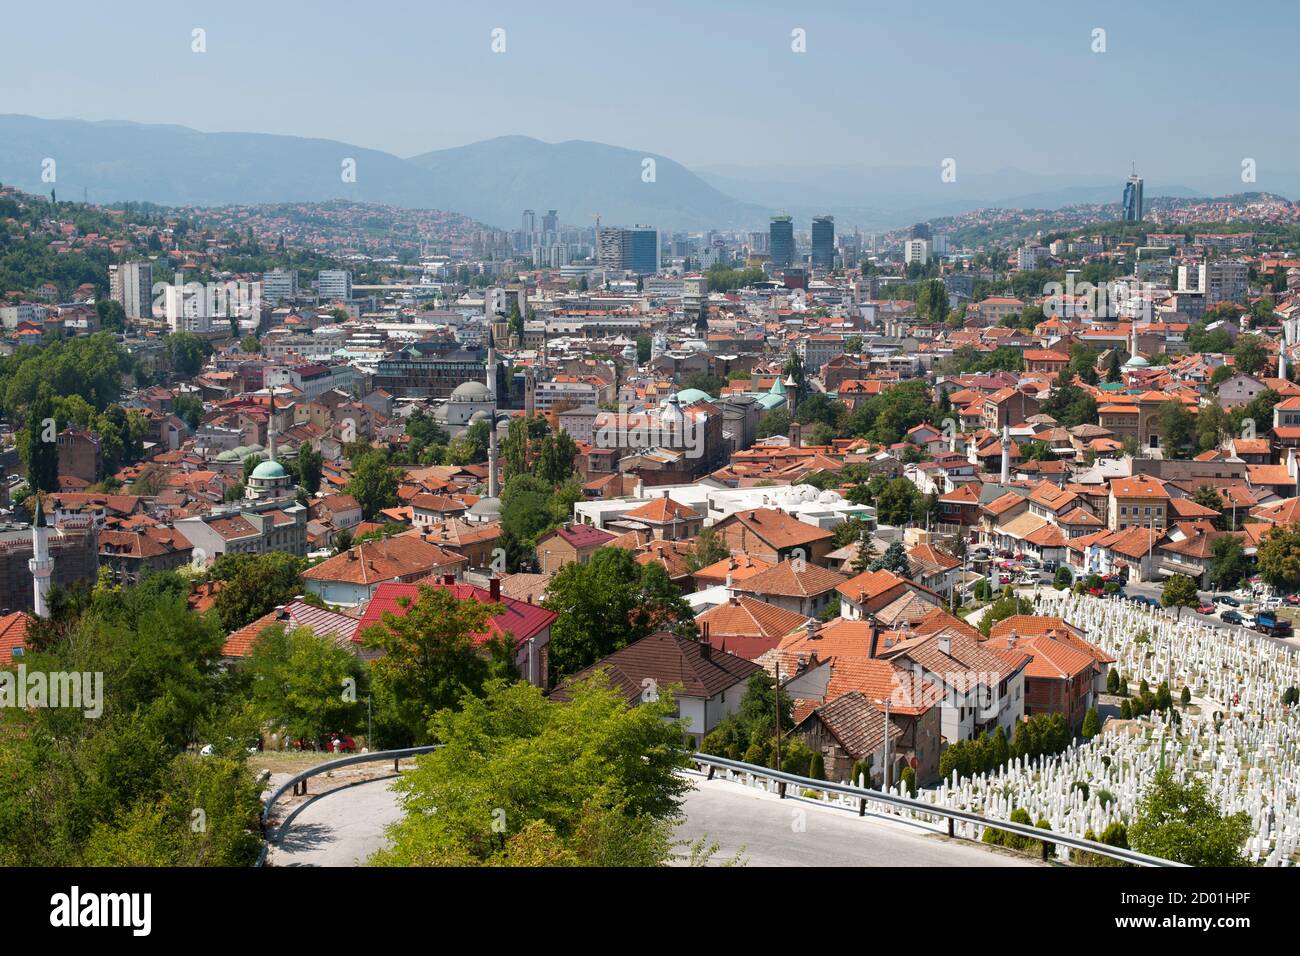 Vista de Sarajevo, la capital de Bosnia y Herzegovina. Foto de stock